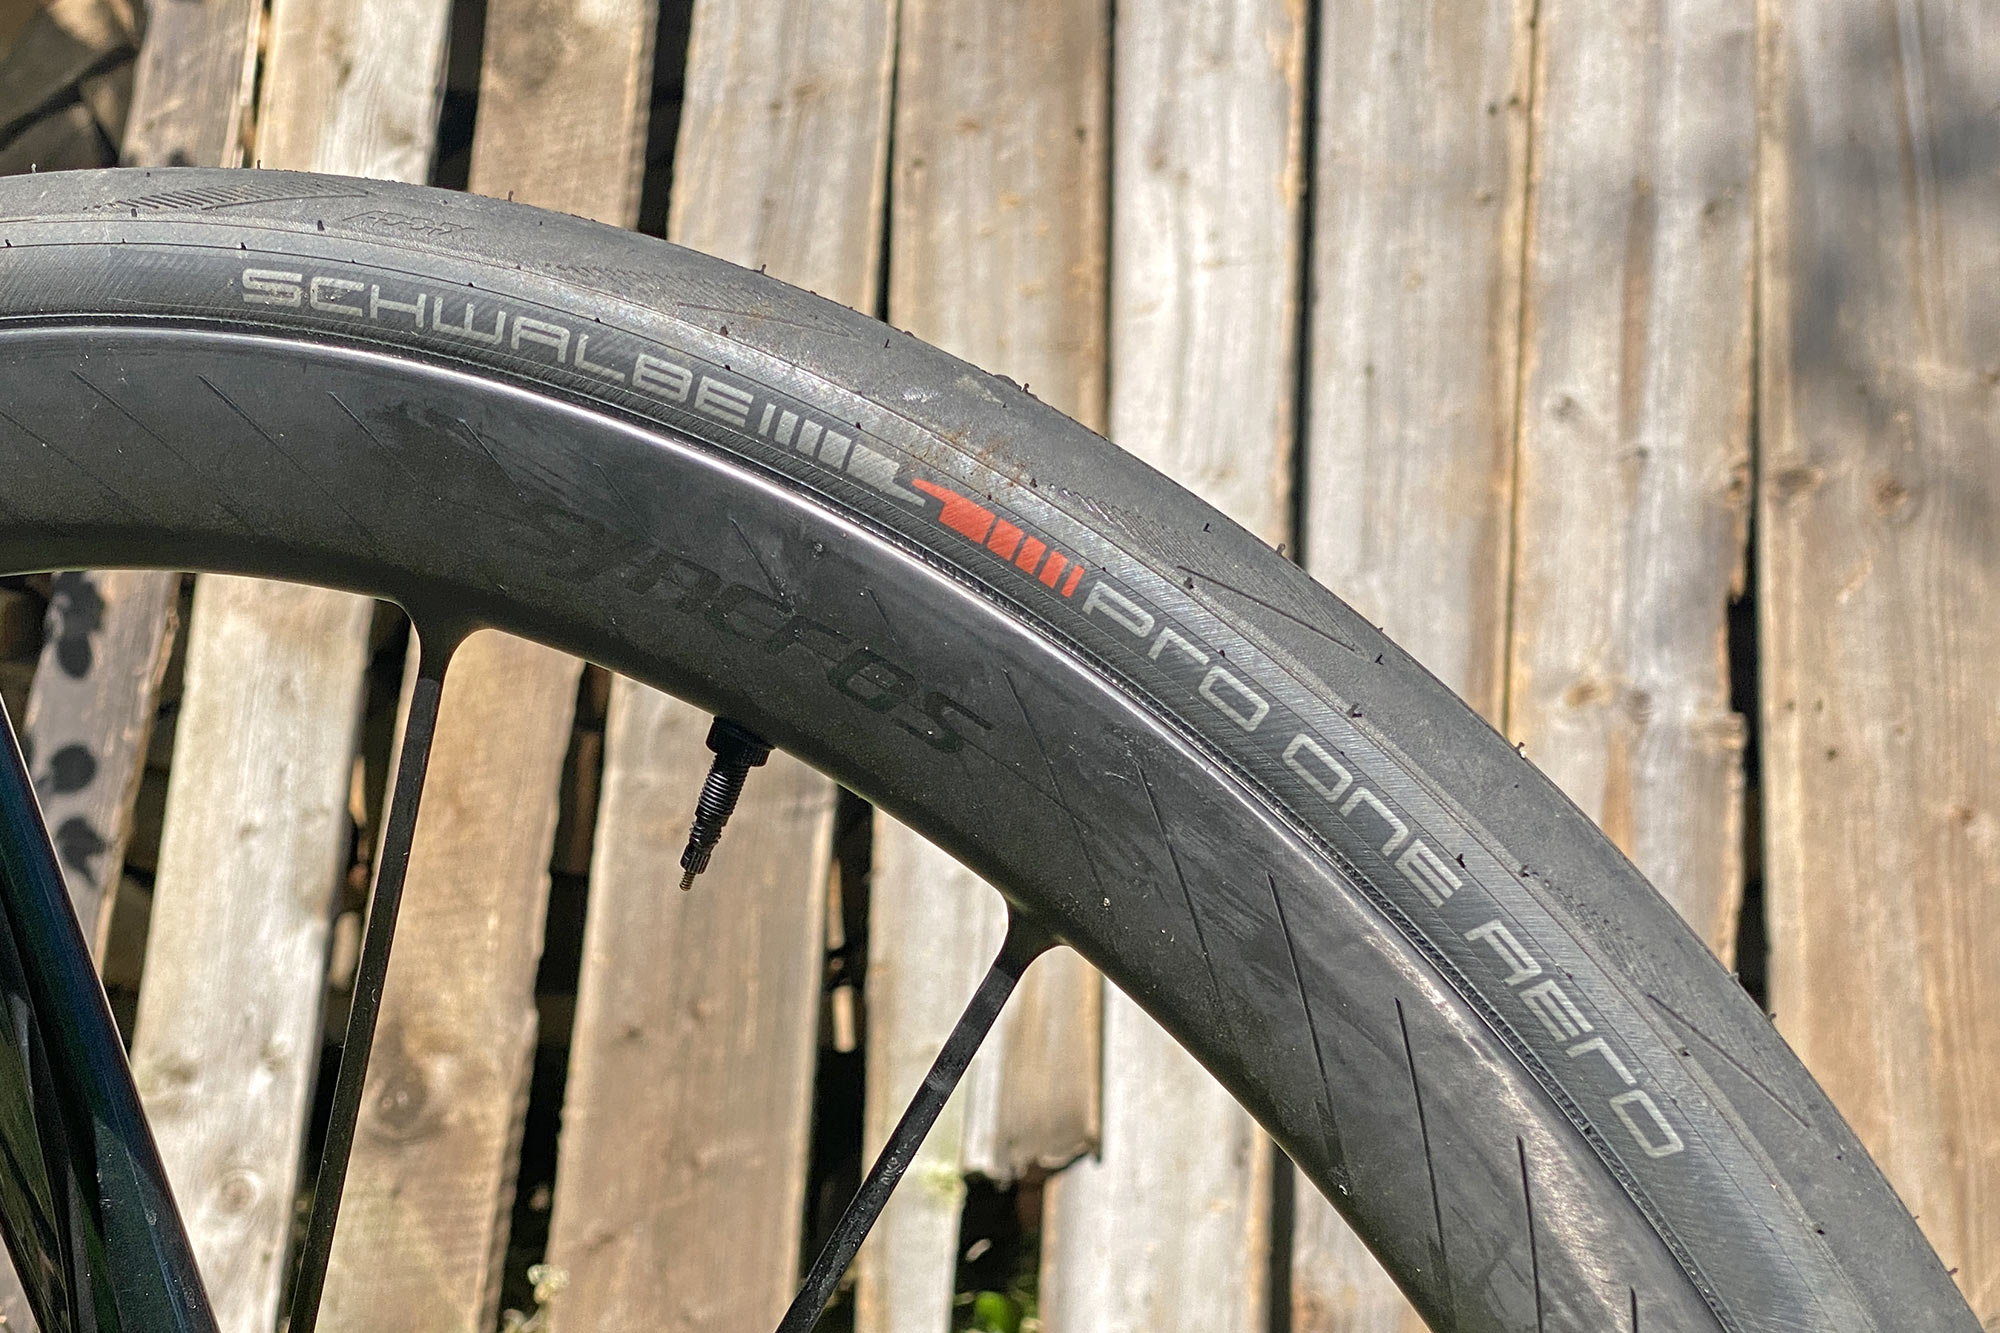 Schwalbe Pro One Aero front-specific & rear-specific aerodynamic racing TT road bike tires,